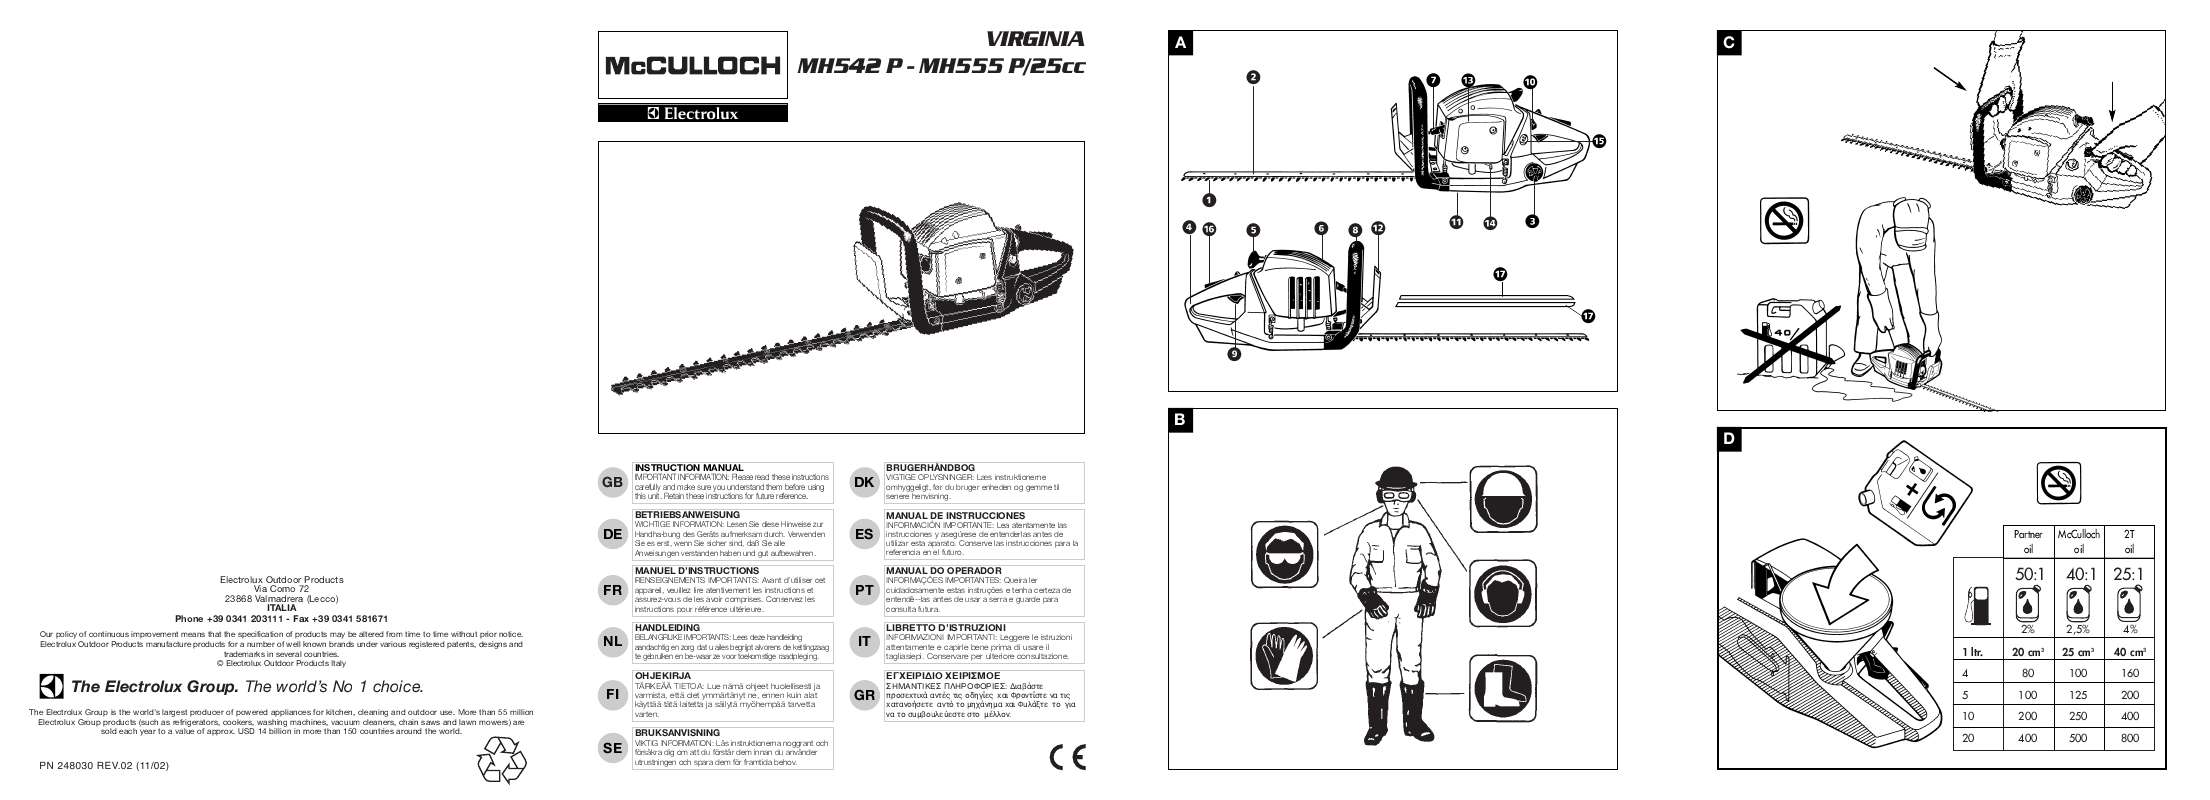 Guide utilisation MCCULLOCH VIRGINIA MH 542  de la marque MCCULLOCH